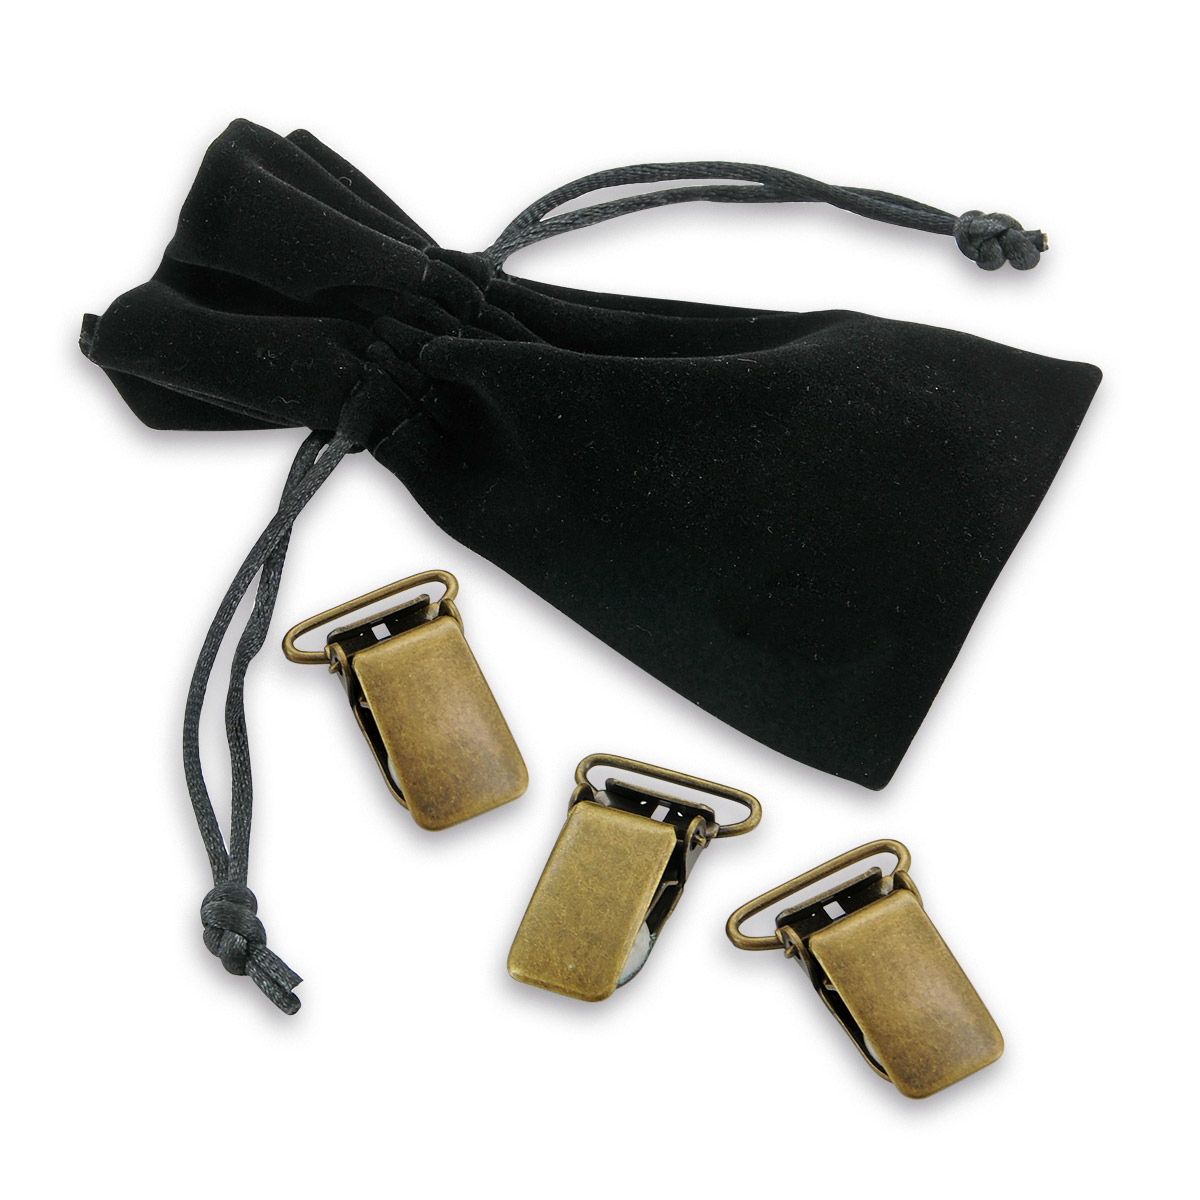 Sir Redman set of suspender clips 20mm antique, Suspenders parts